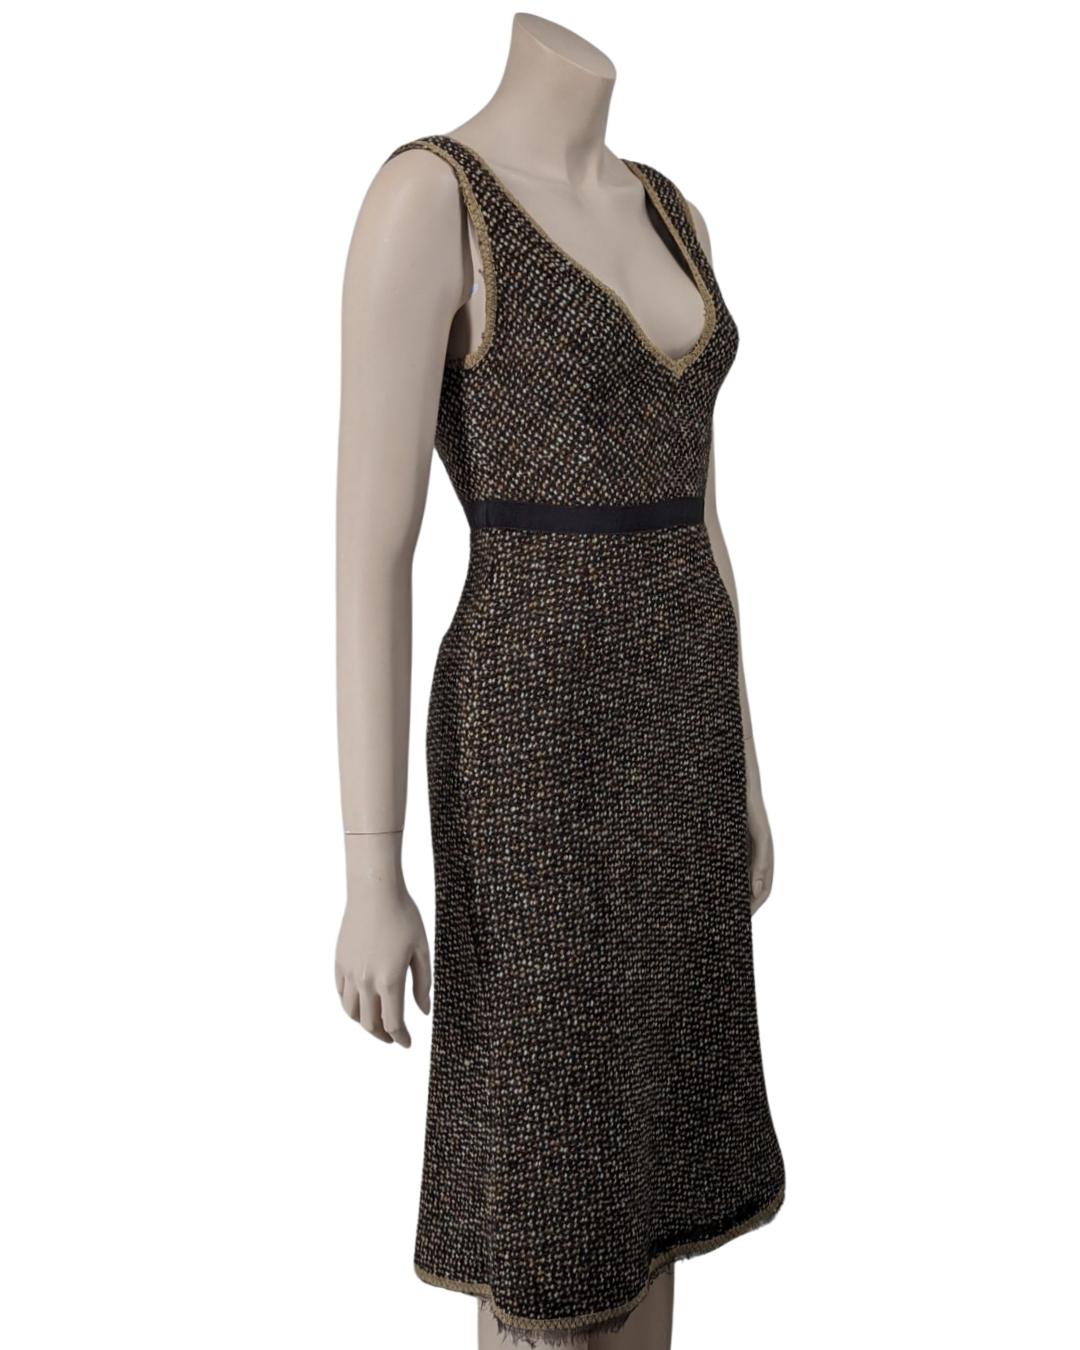 Prada Fall 2000 Runway Tweed Dress by Miuccia Prada In Good Condition For Sale In GOUVIEUX, FR